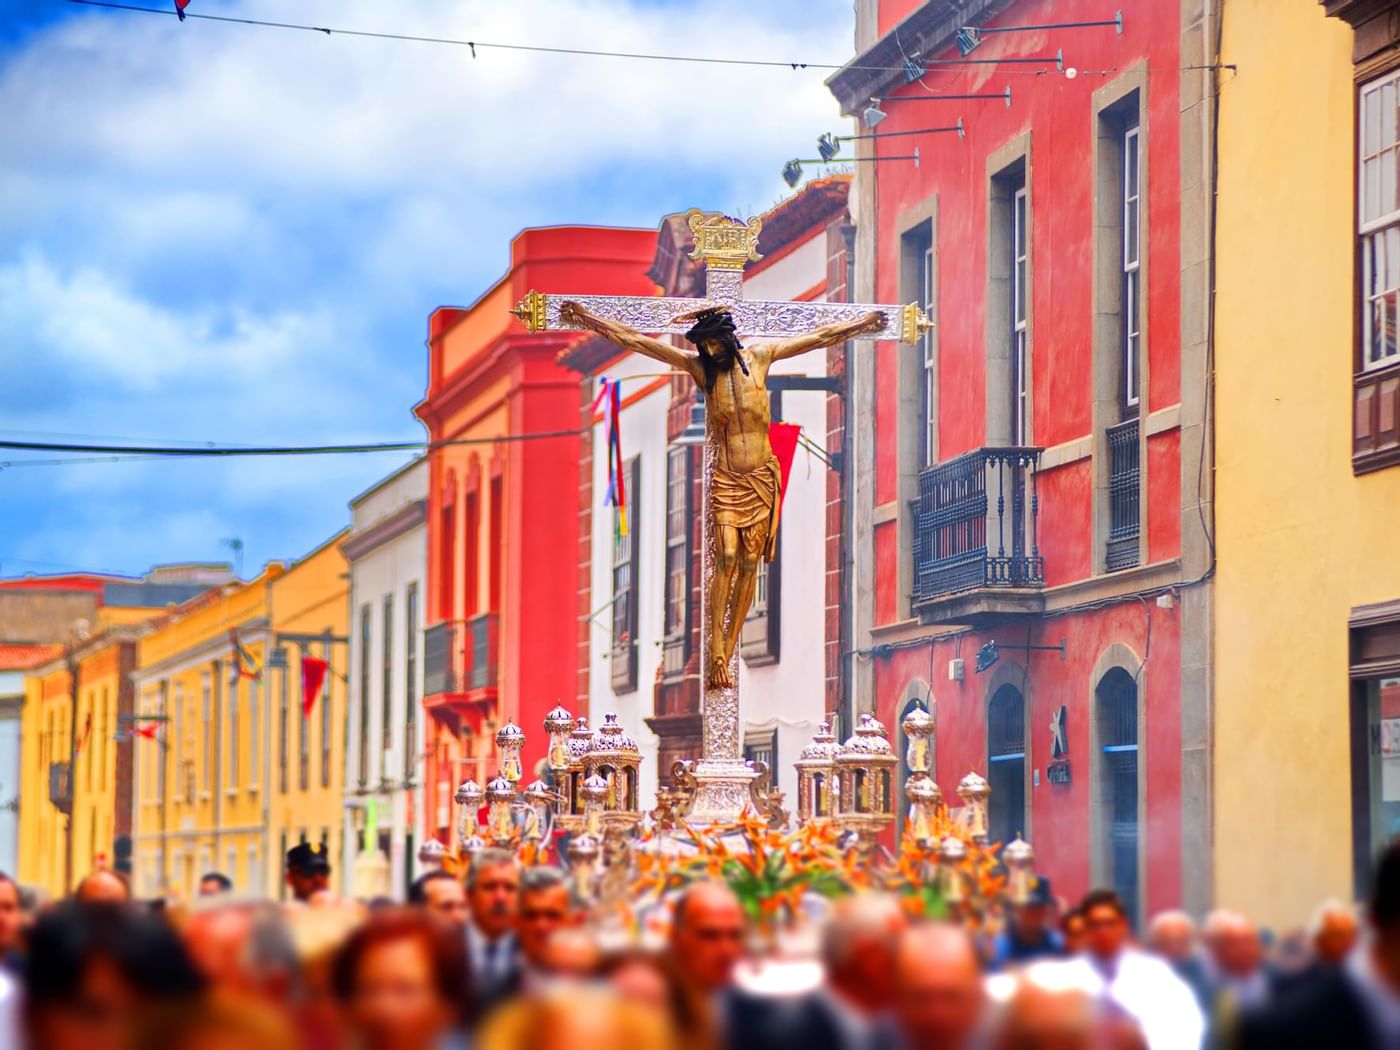 Carrying a cross in a procession near Grand Fiesta Americana